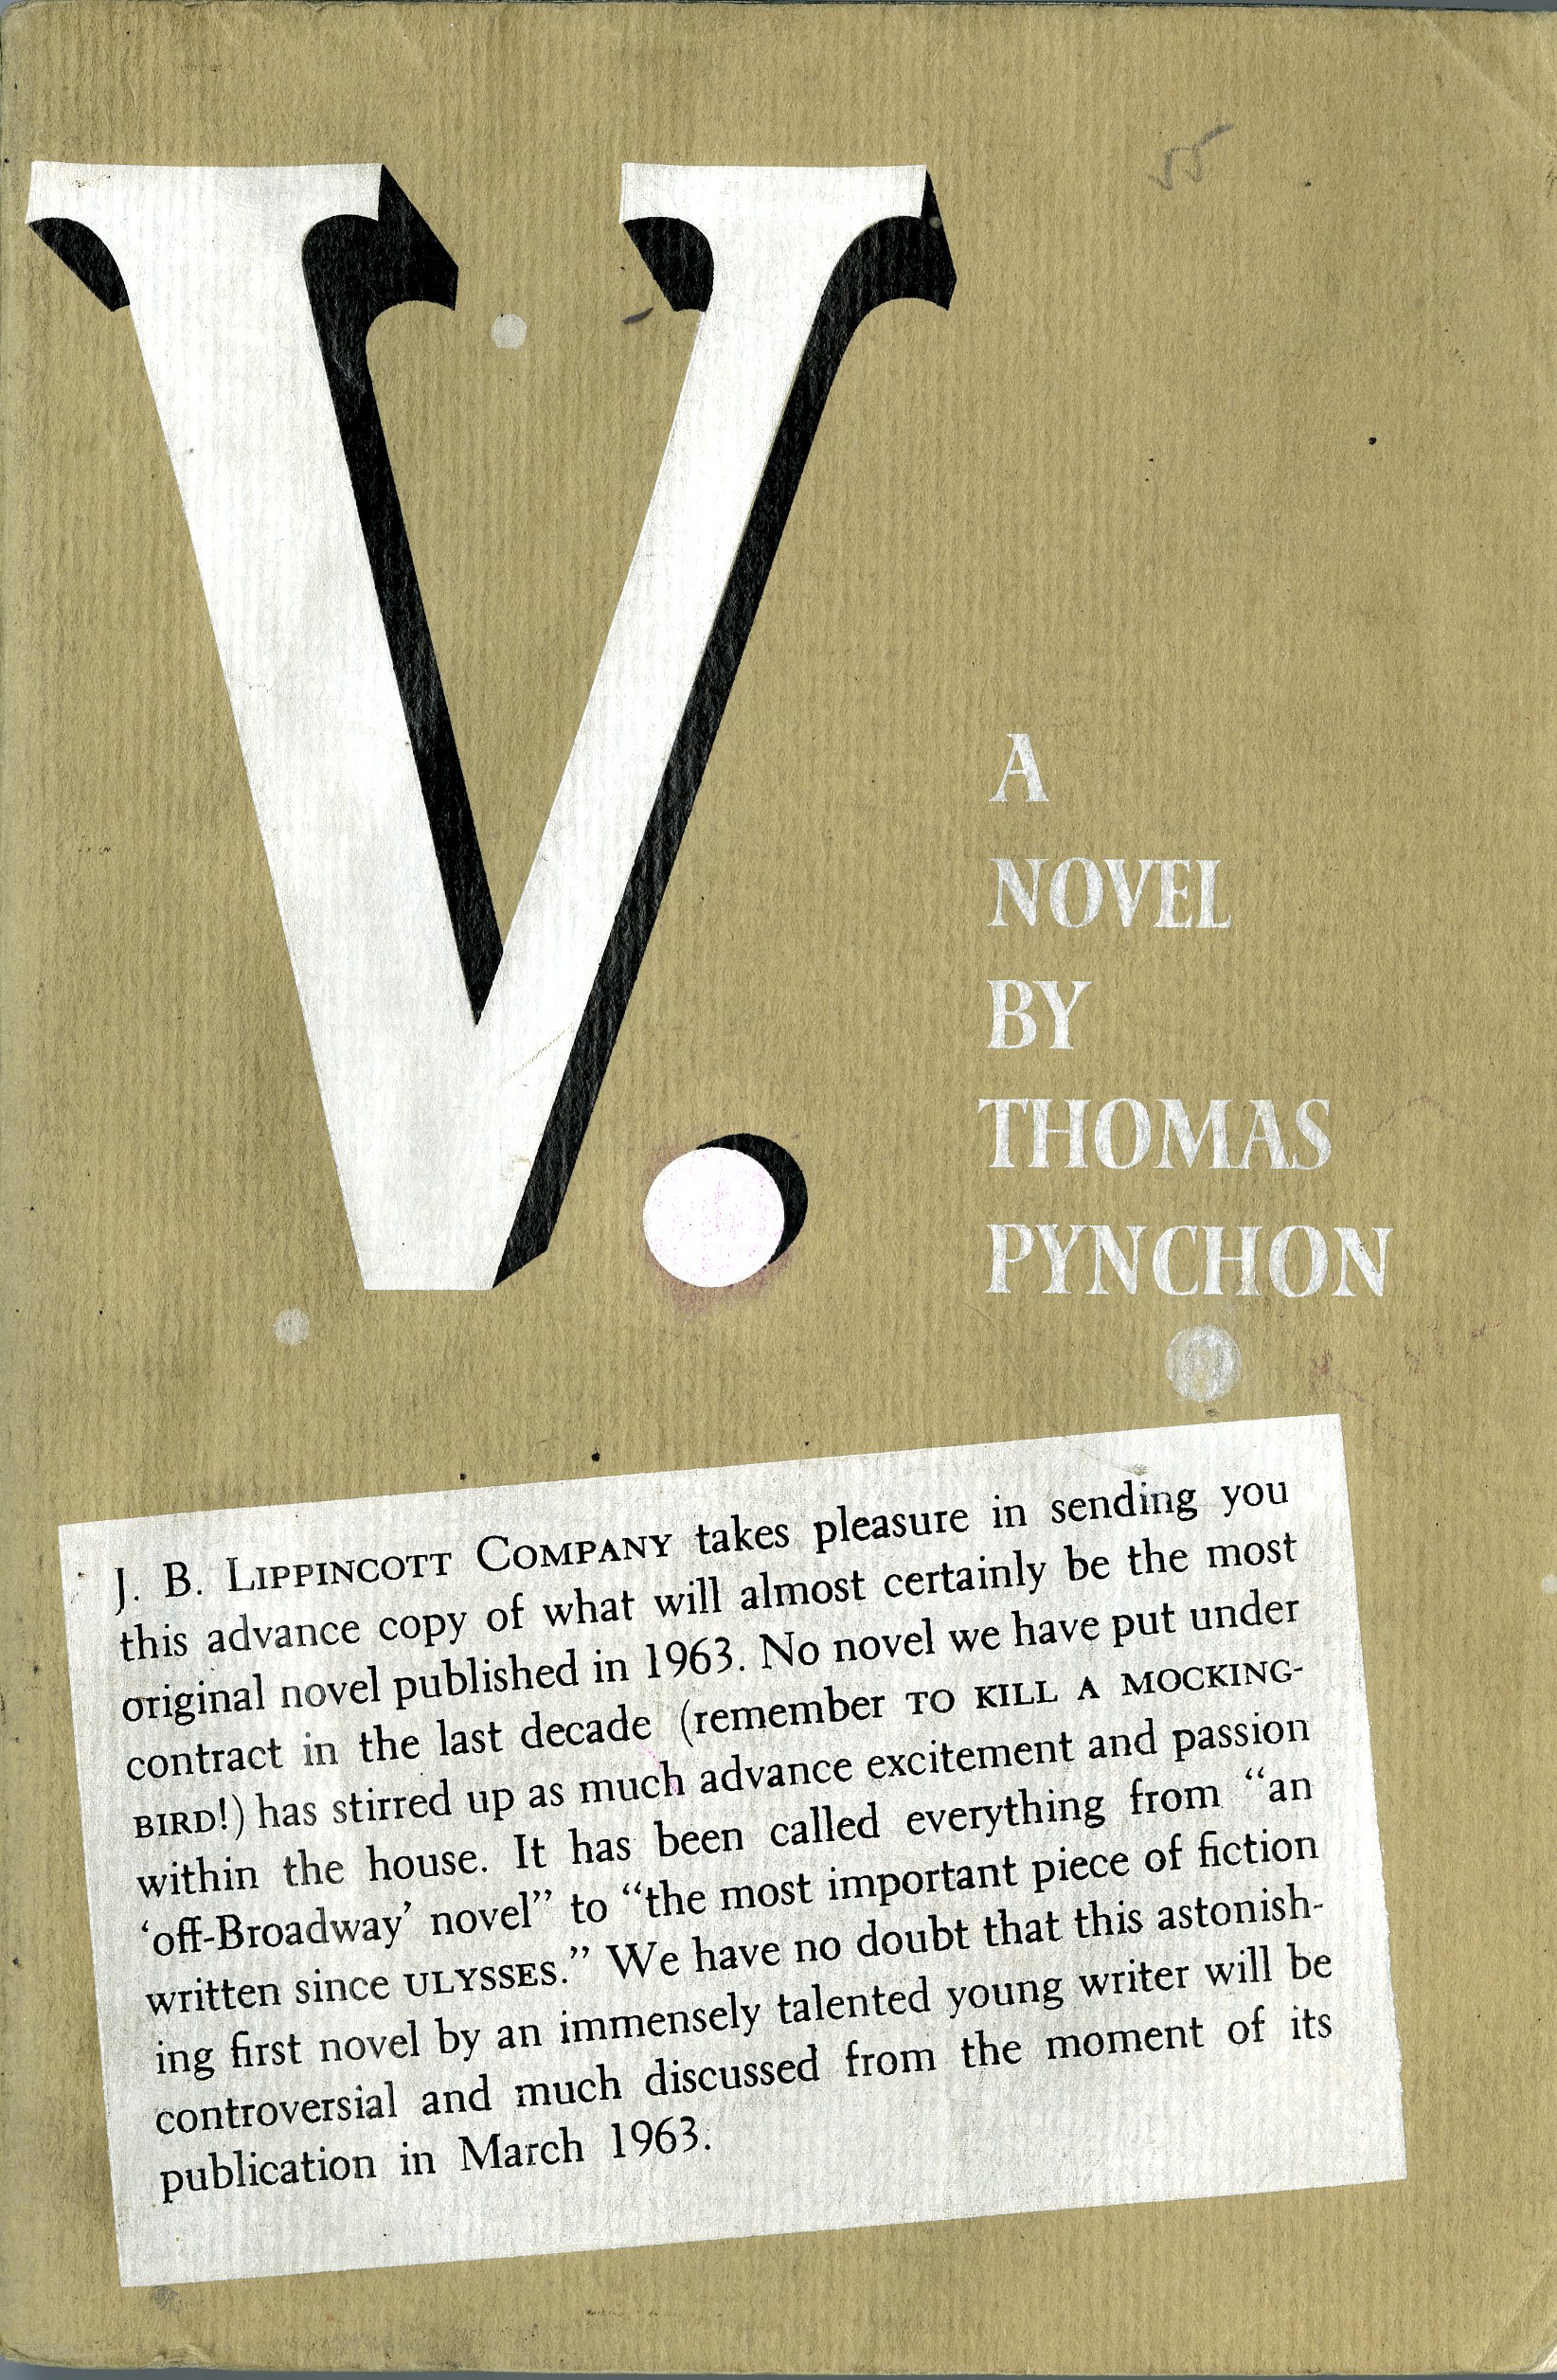 Pynchon, Thomas. V.: a novel. Advance reading copy. Philadelphia: Lippincott, 1963